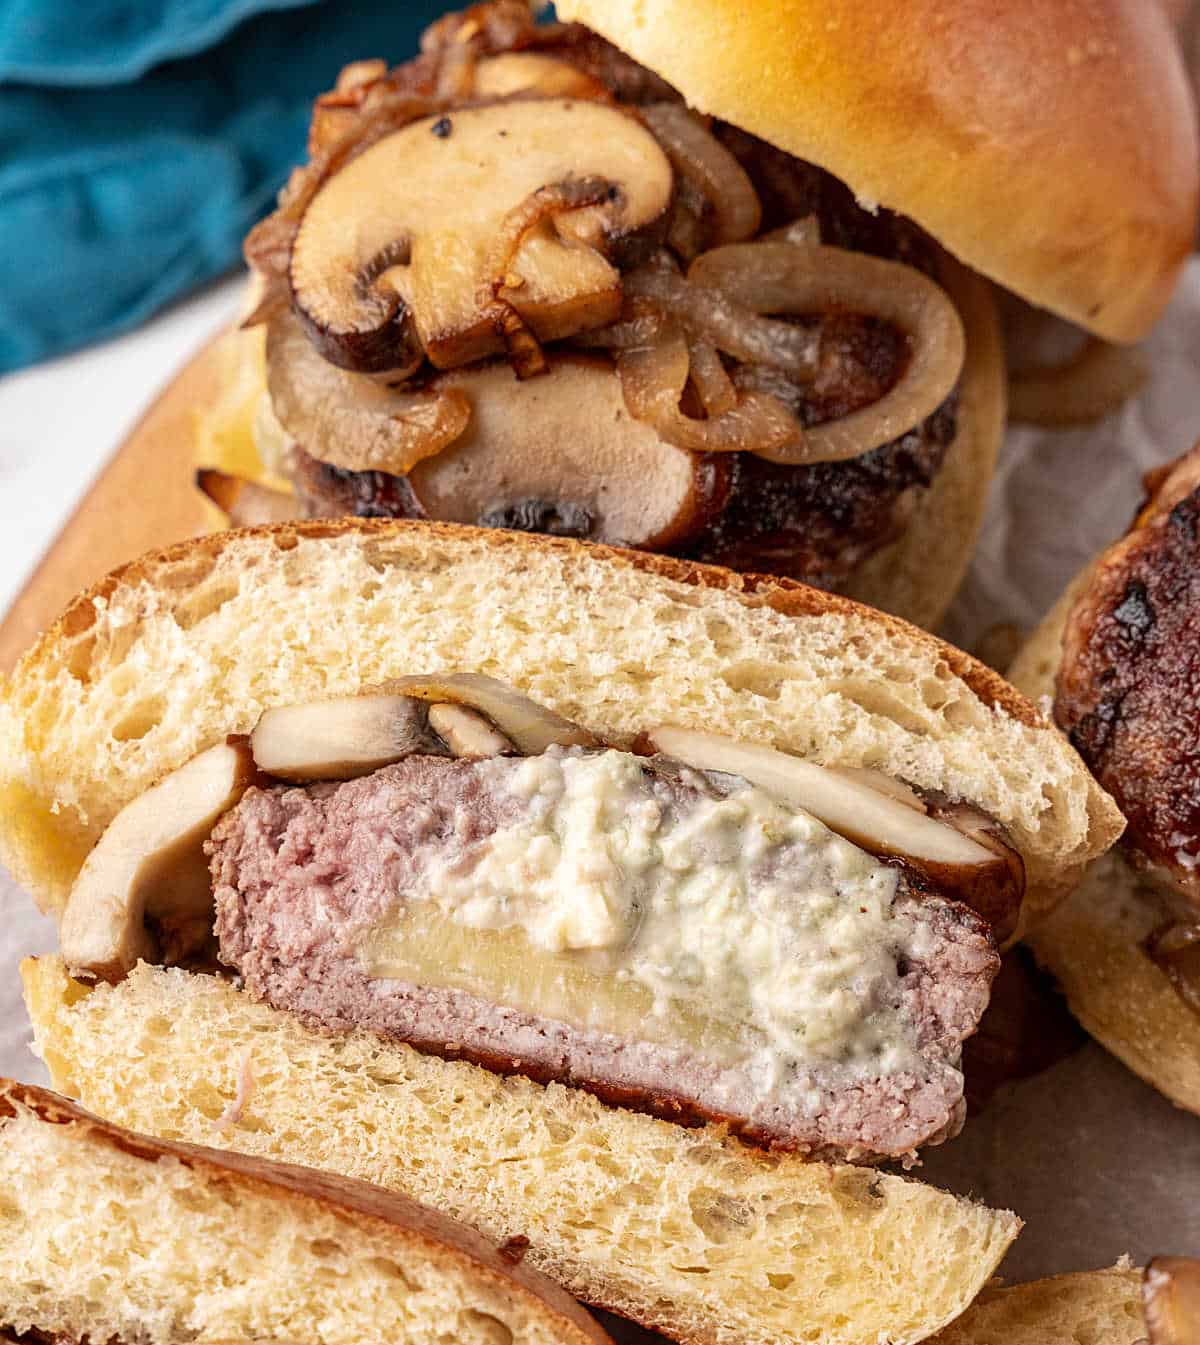 Halved blue cheese stuffed hamburger and bun, mushroom garnish.